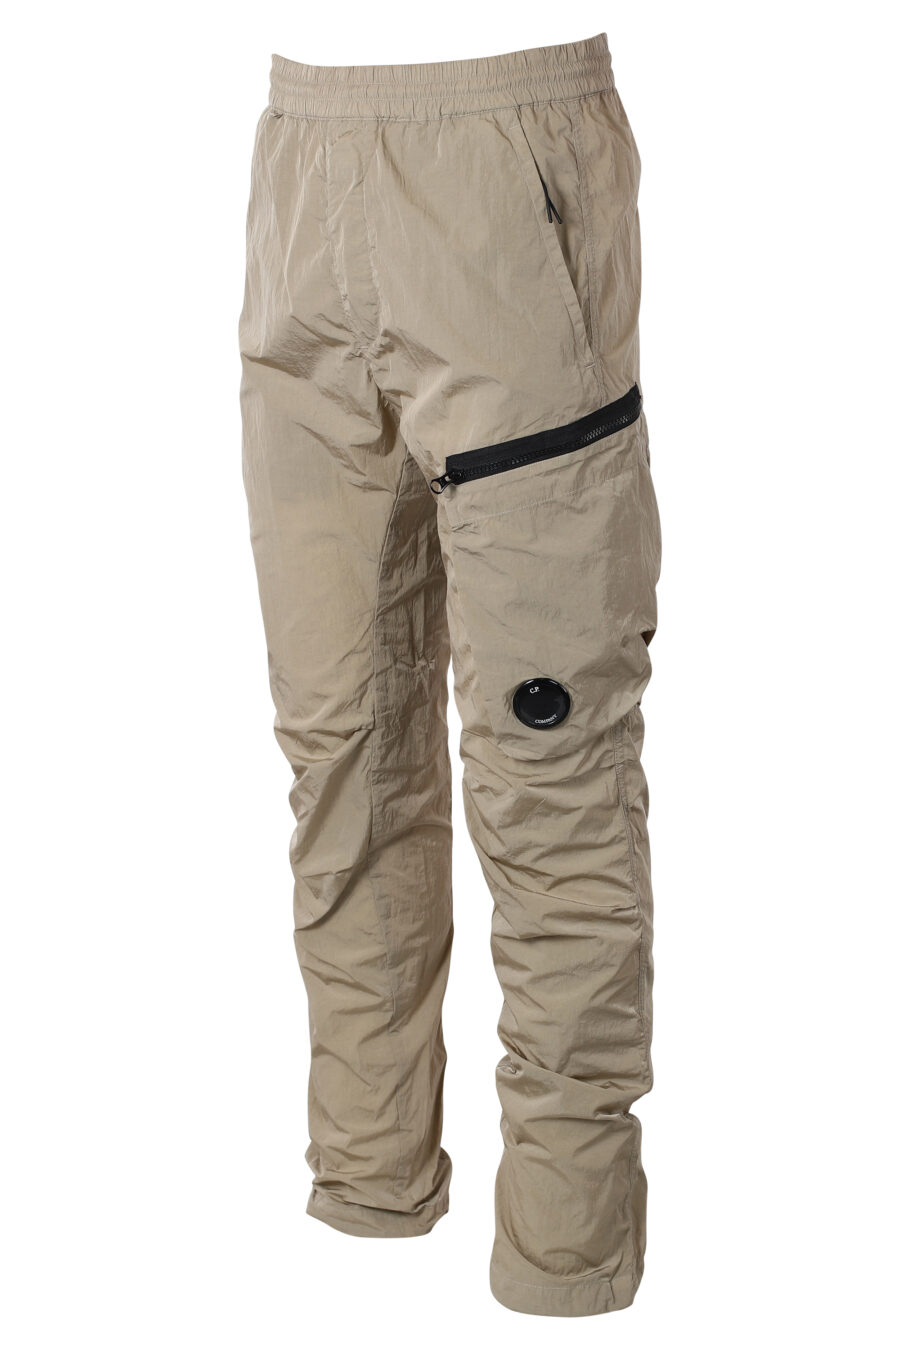 C.P. Company - Pantalón beige de satén elástico con bolsillo lateral y logo  lente - BLS Fashion